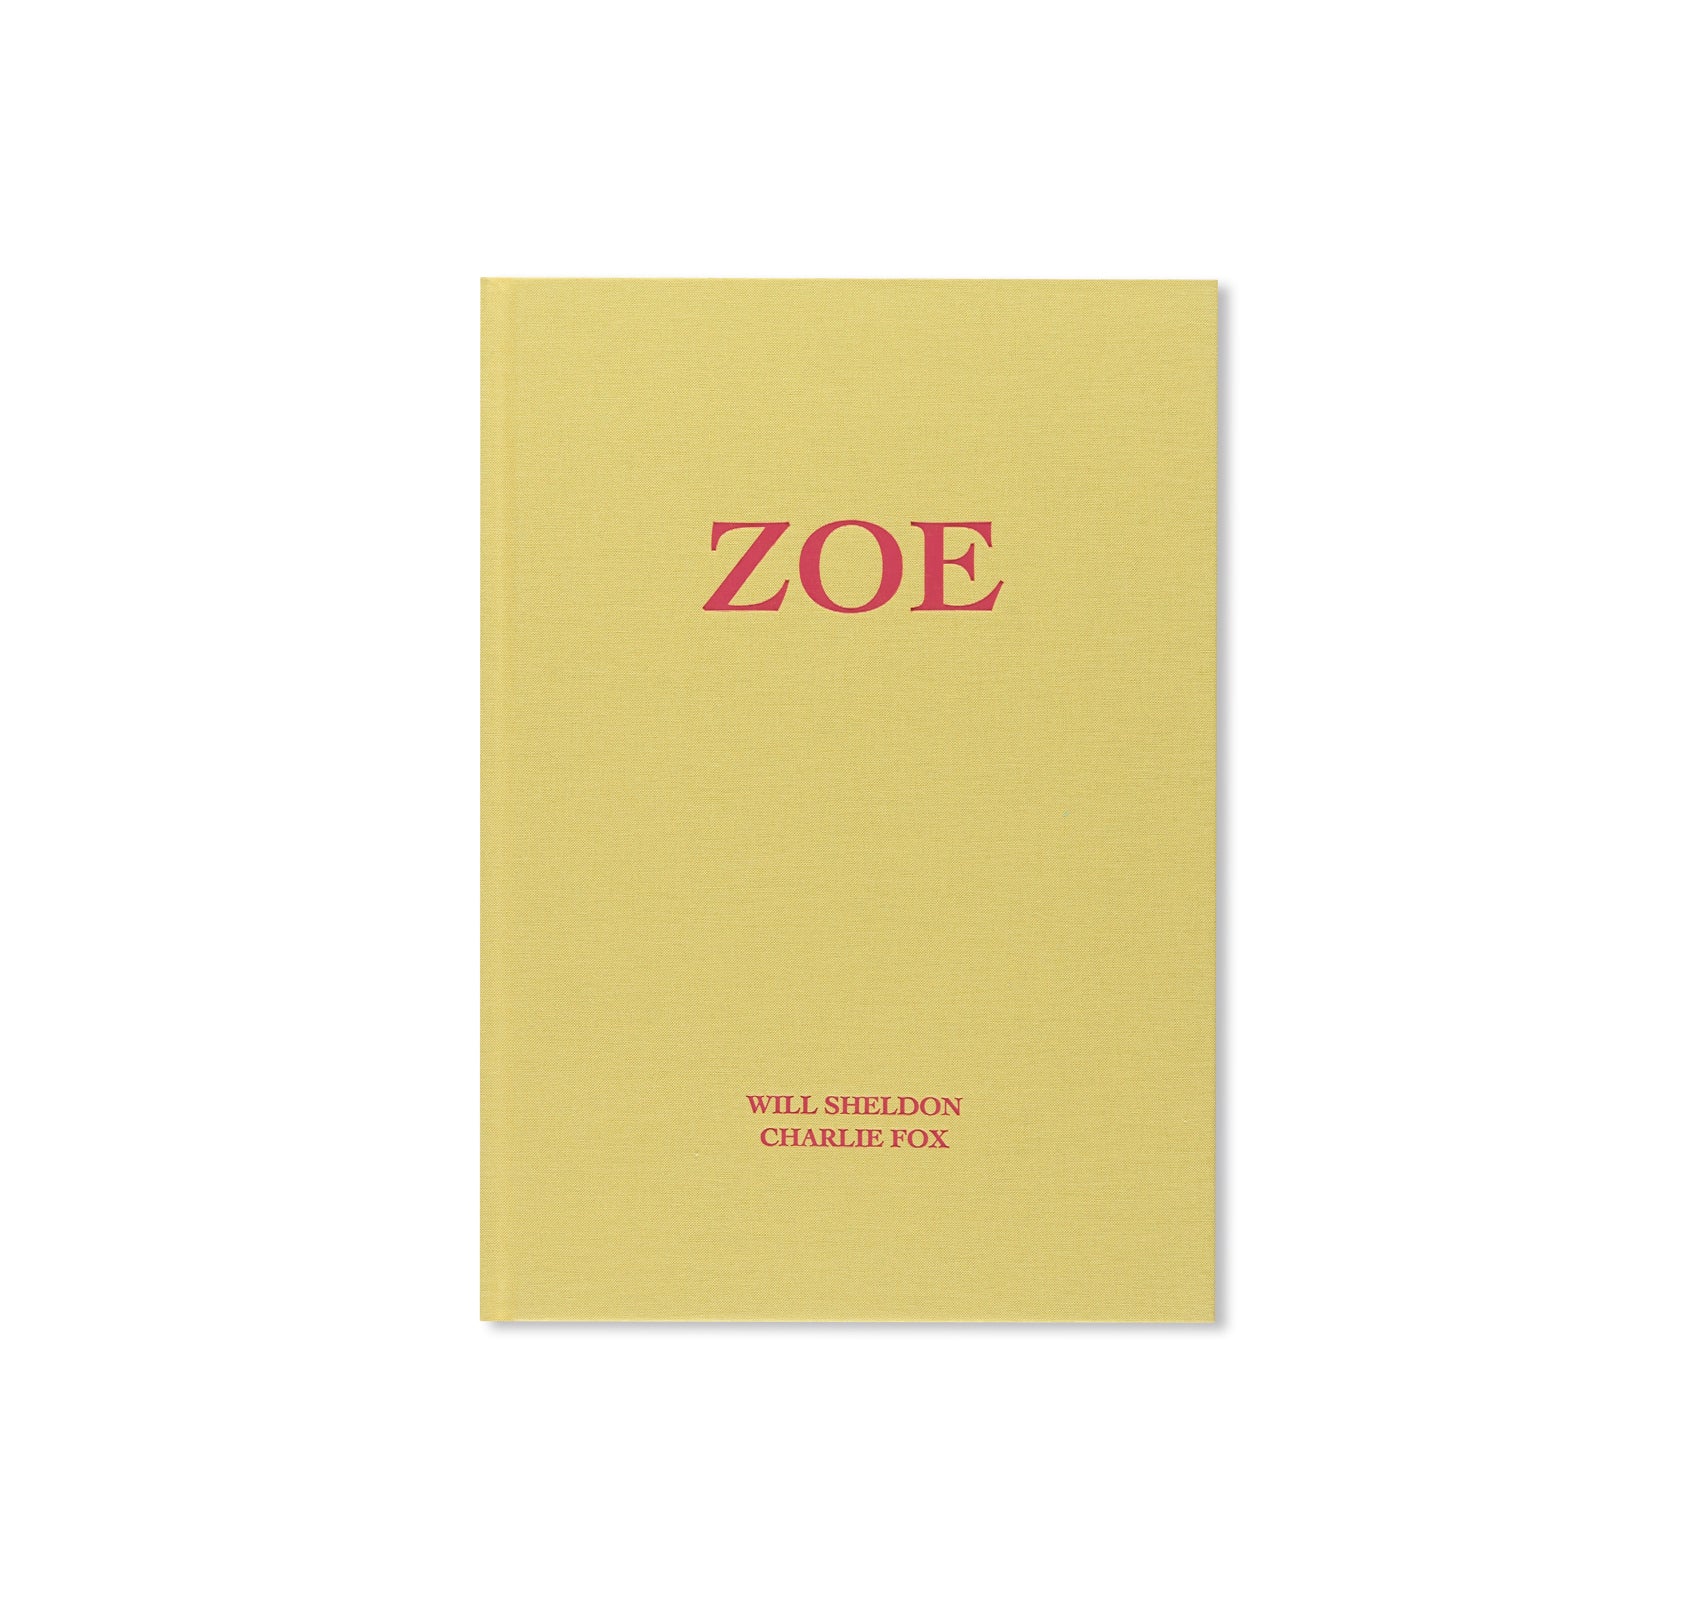 ZOE by Will Sheldon, Charlie Fox